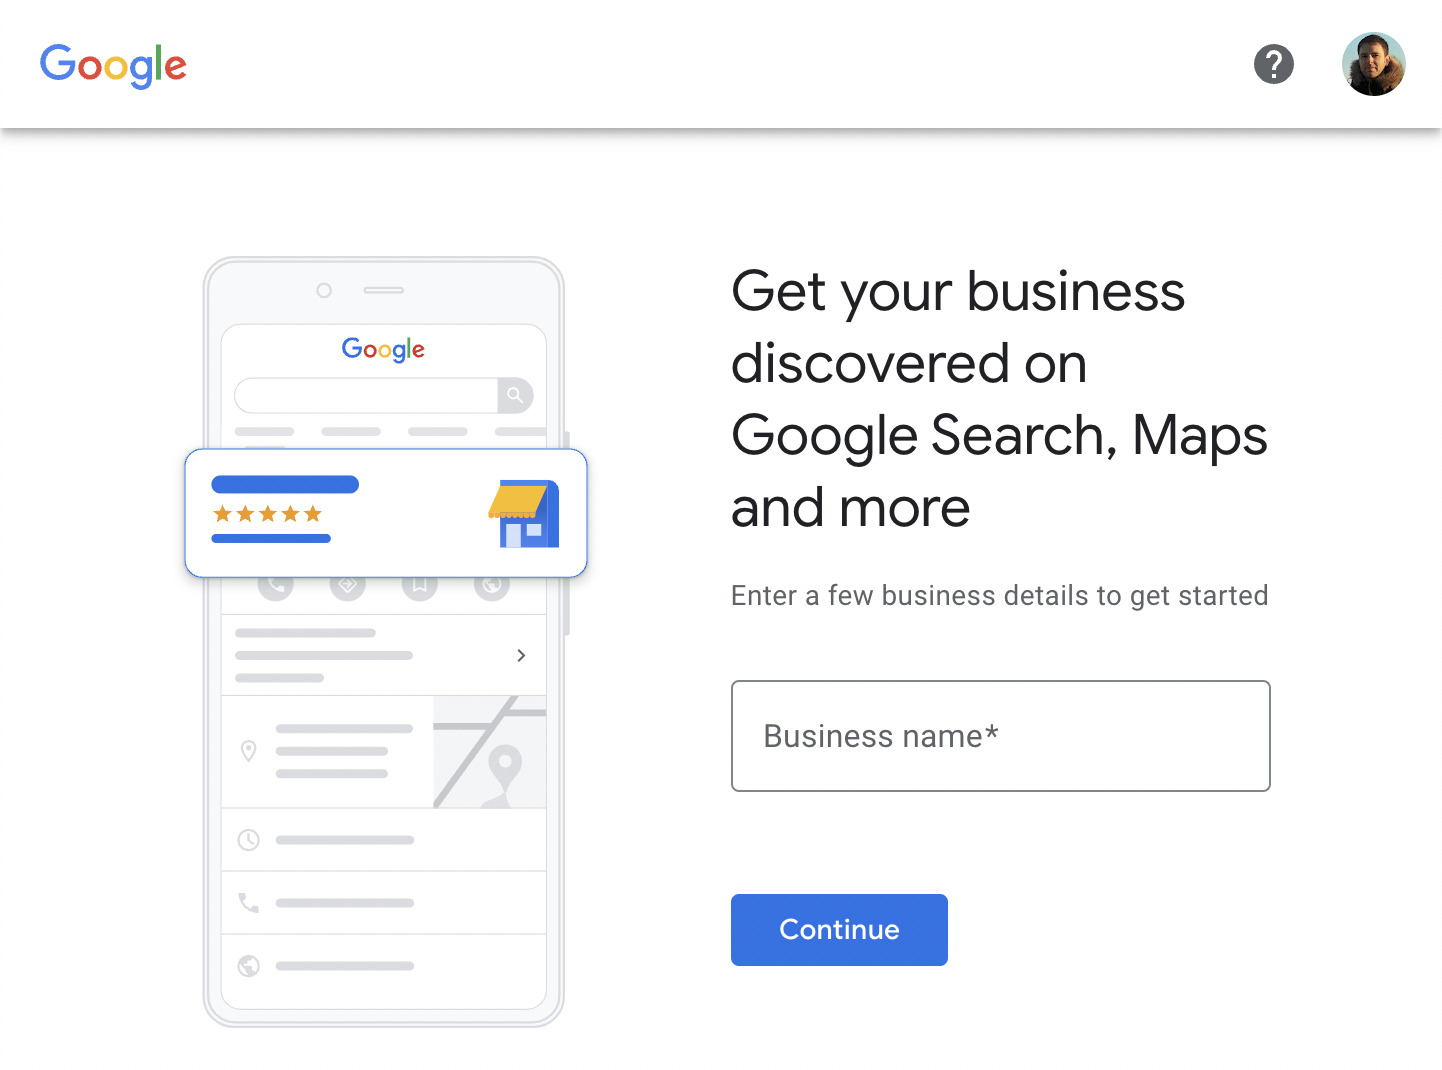 Google Business start page, via Google Business Profile
